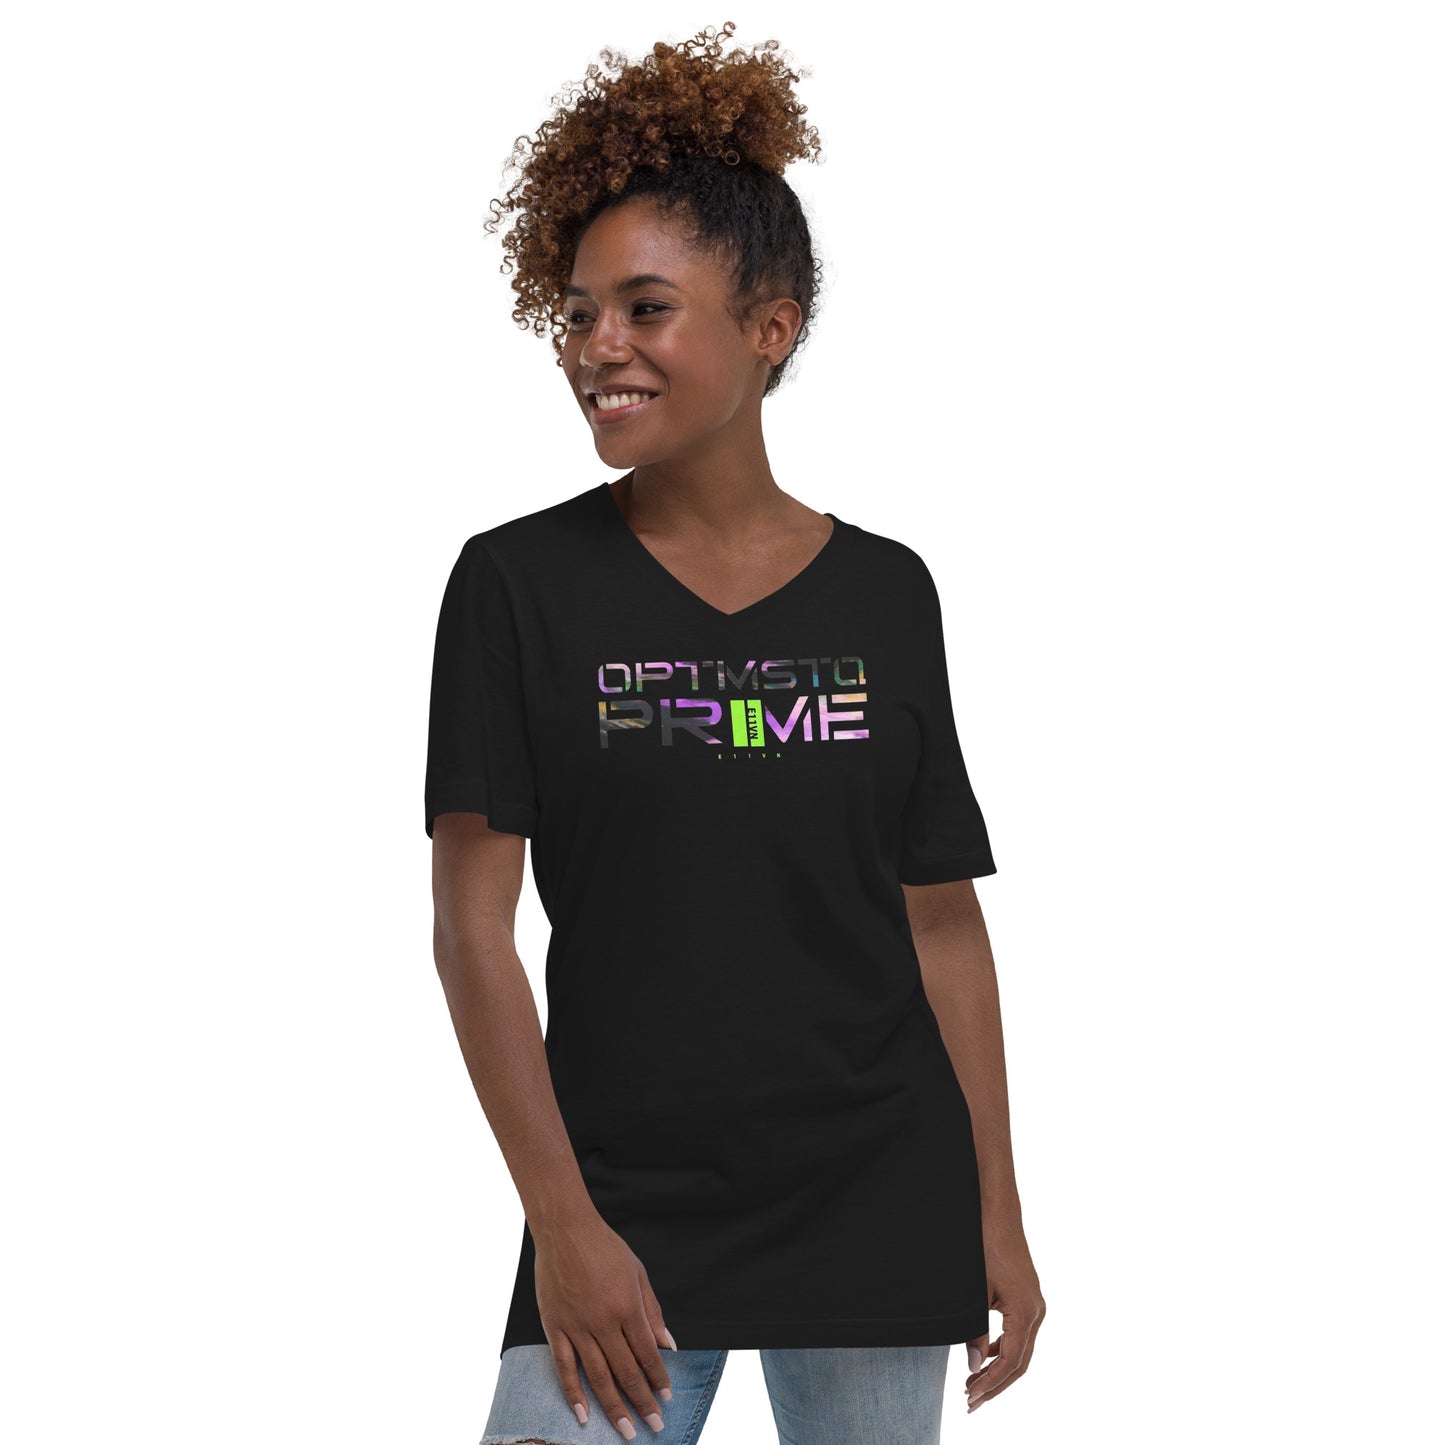 Optimstq PrIIMe Women's V-Neck T-Shirt